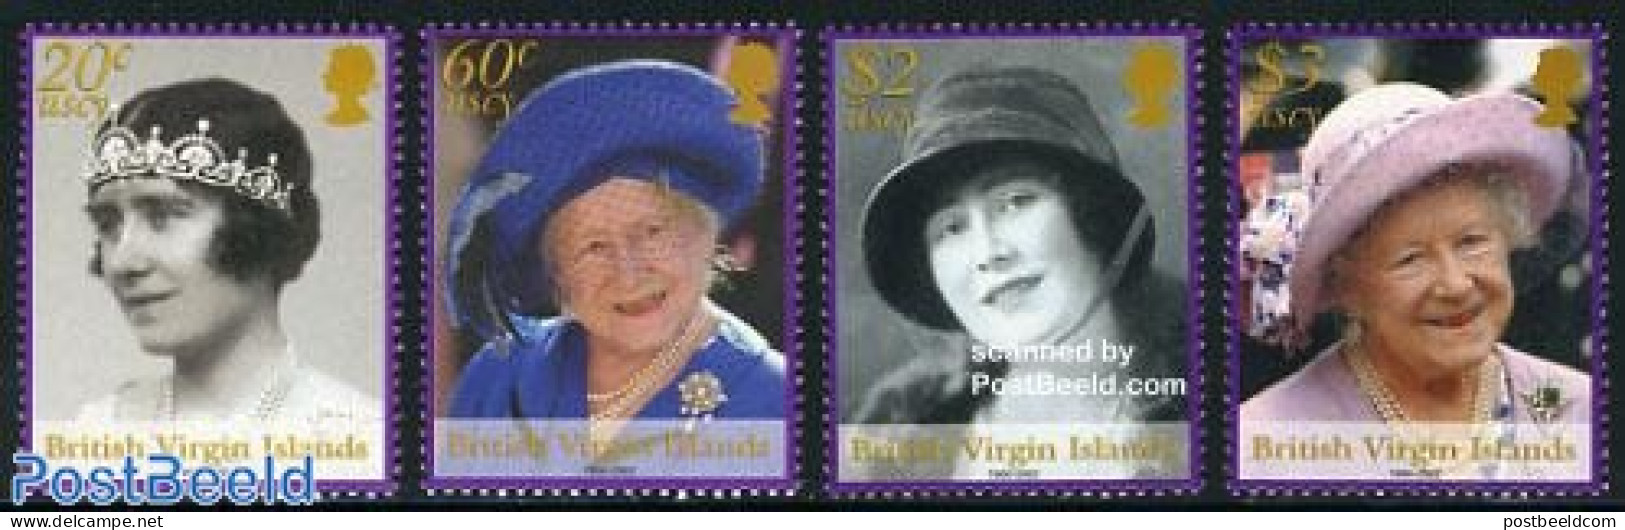 Virgin Islands 2002 Queen Mother 4v, Mint NH, History - Kings & Queens (Royalty) - Royalties, Royals